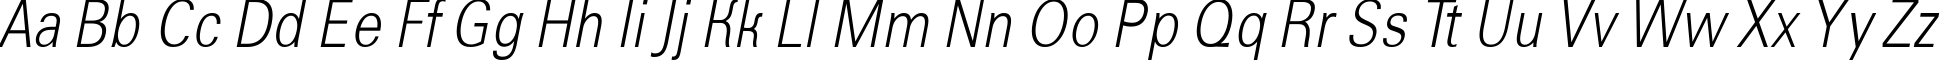 Пример написания английского алфавита шрифтом a_GroticLtNr Italic